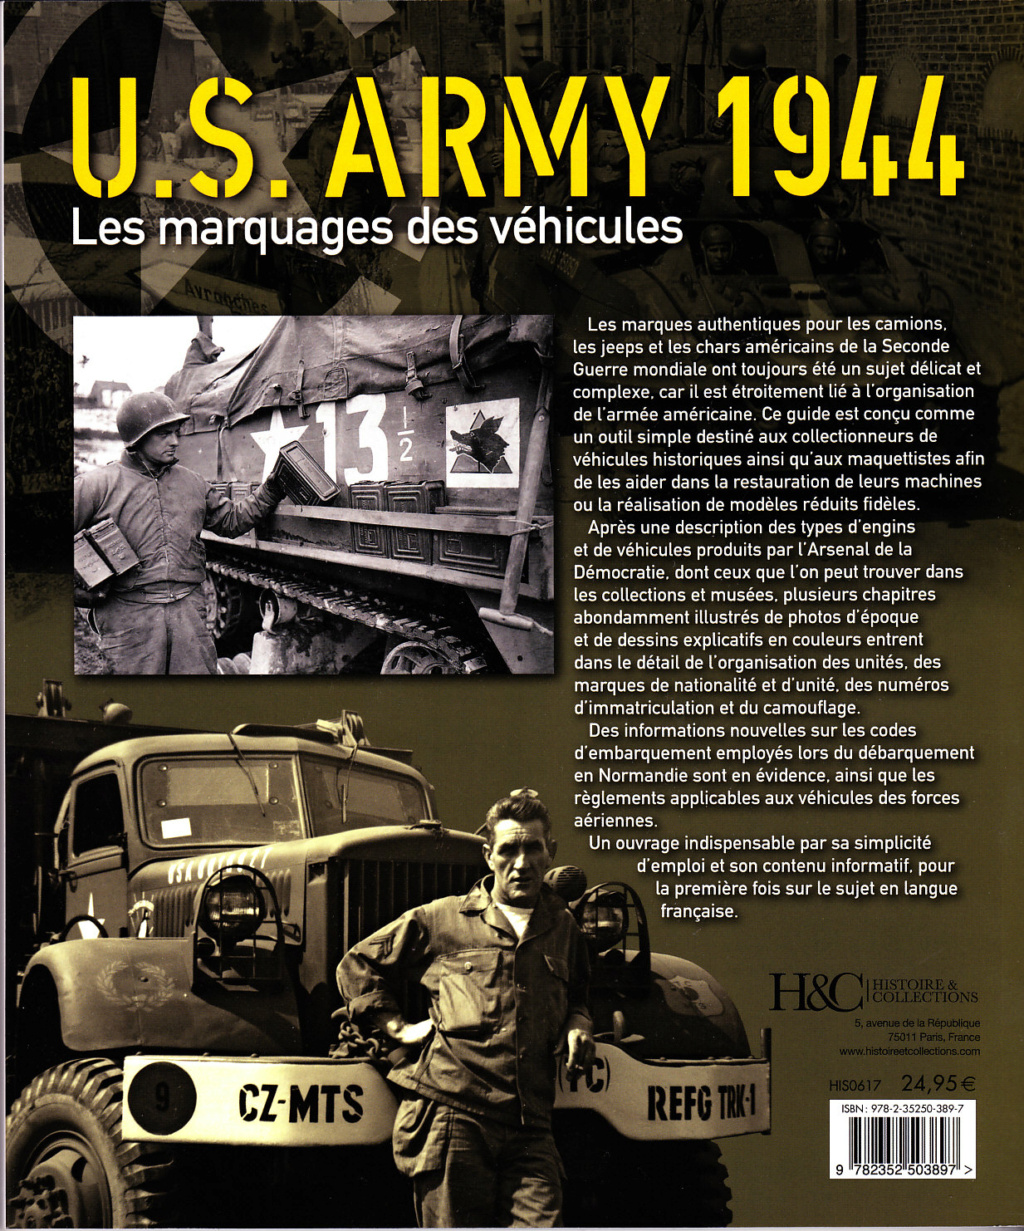 U.S. ARMY 1944  " Les marquages des véhicules "  Im000432